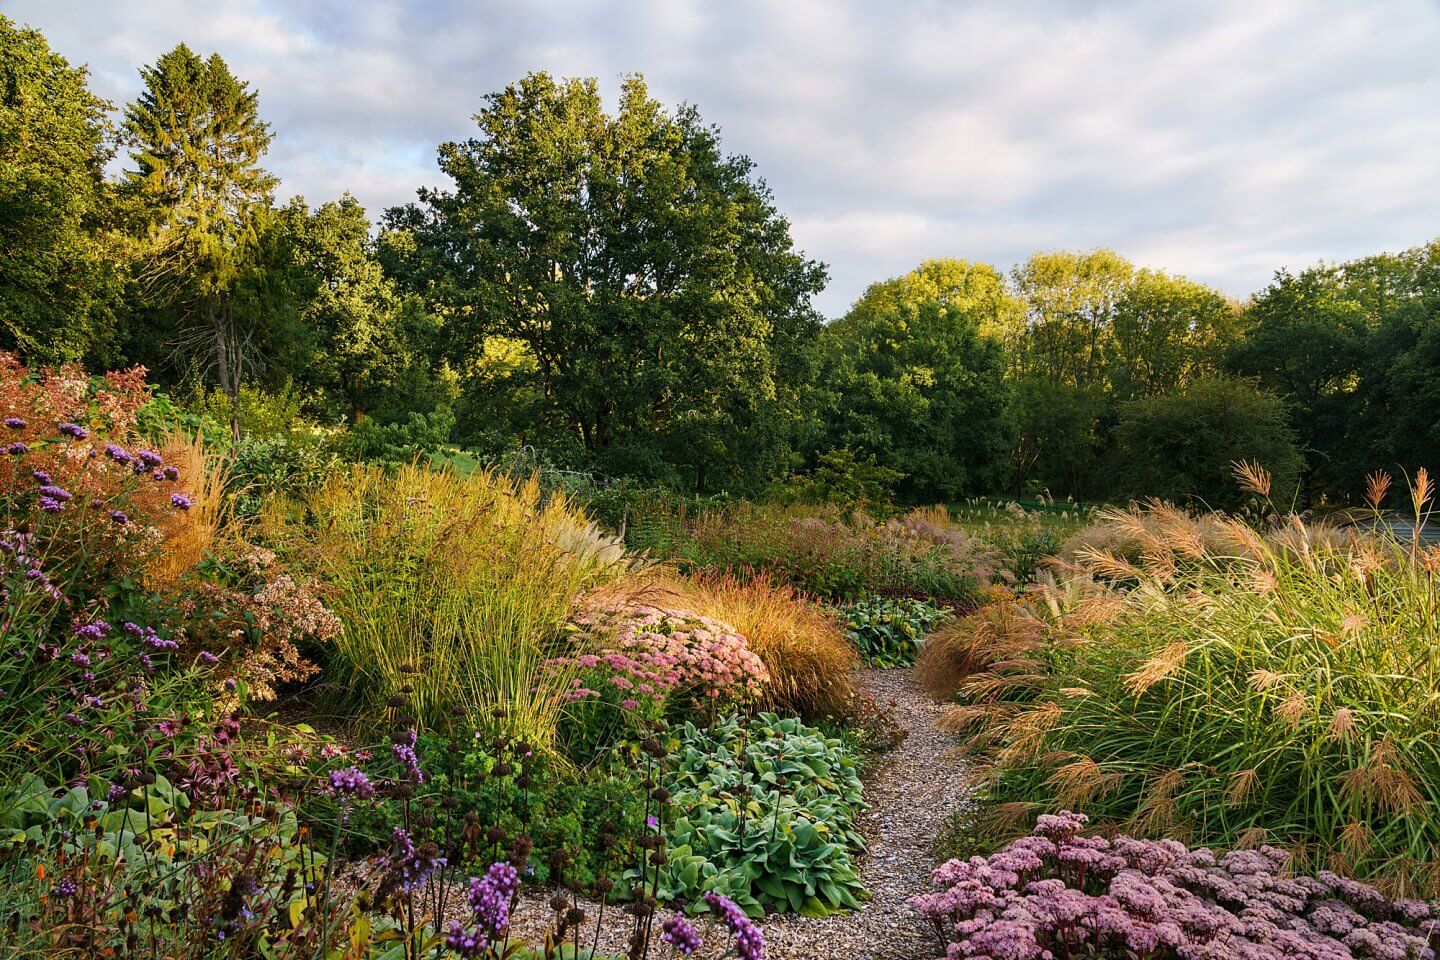 prairie style planting borders with sedum grasses and verbena in autumn English Garden magazine Surrey